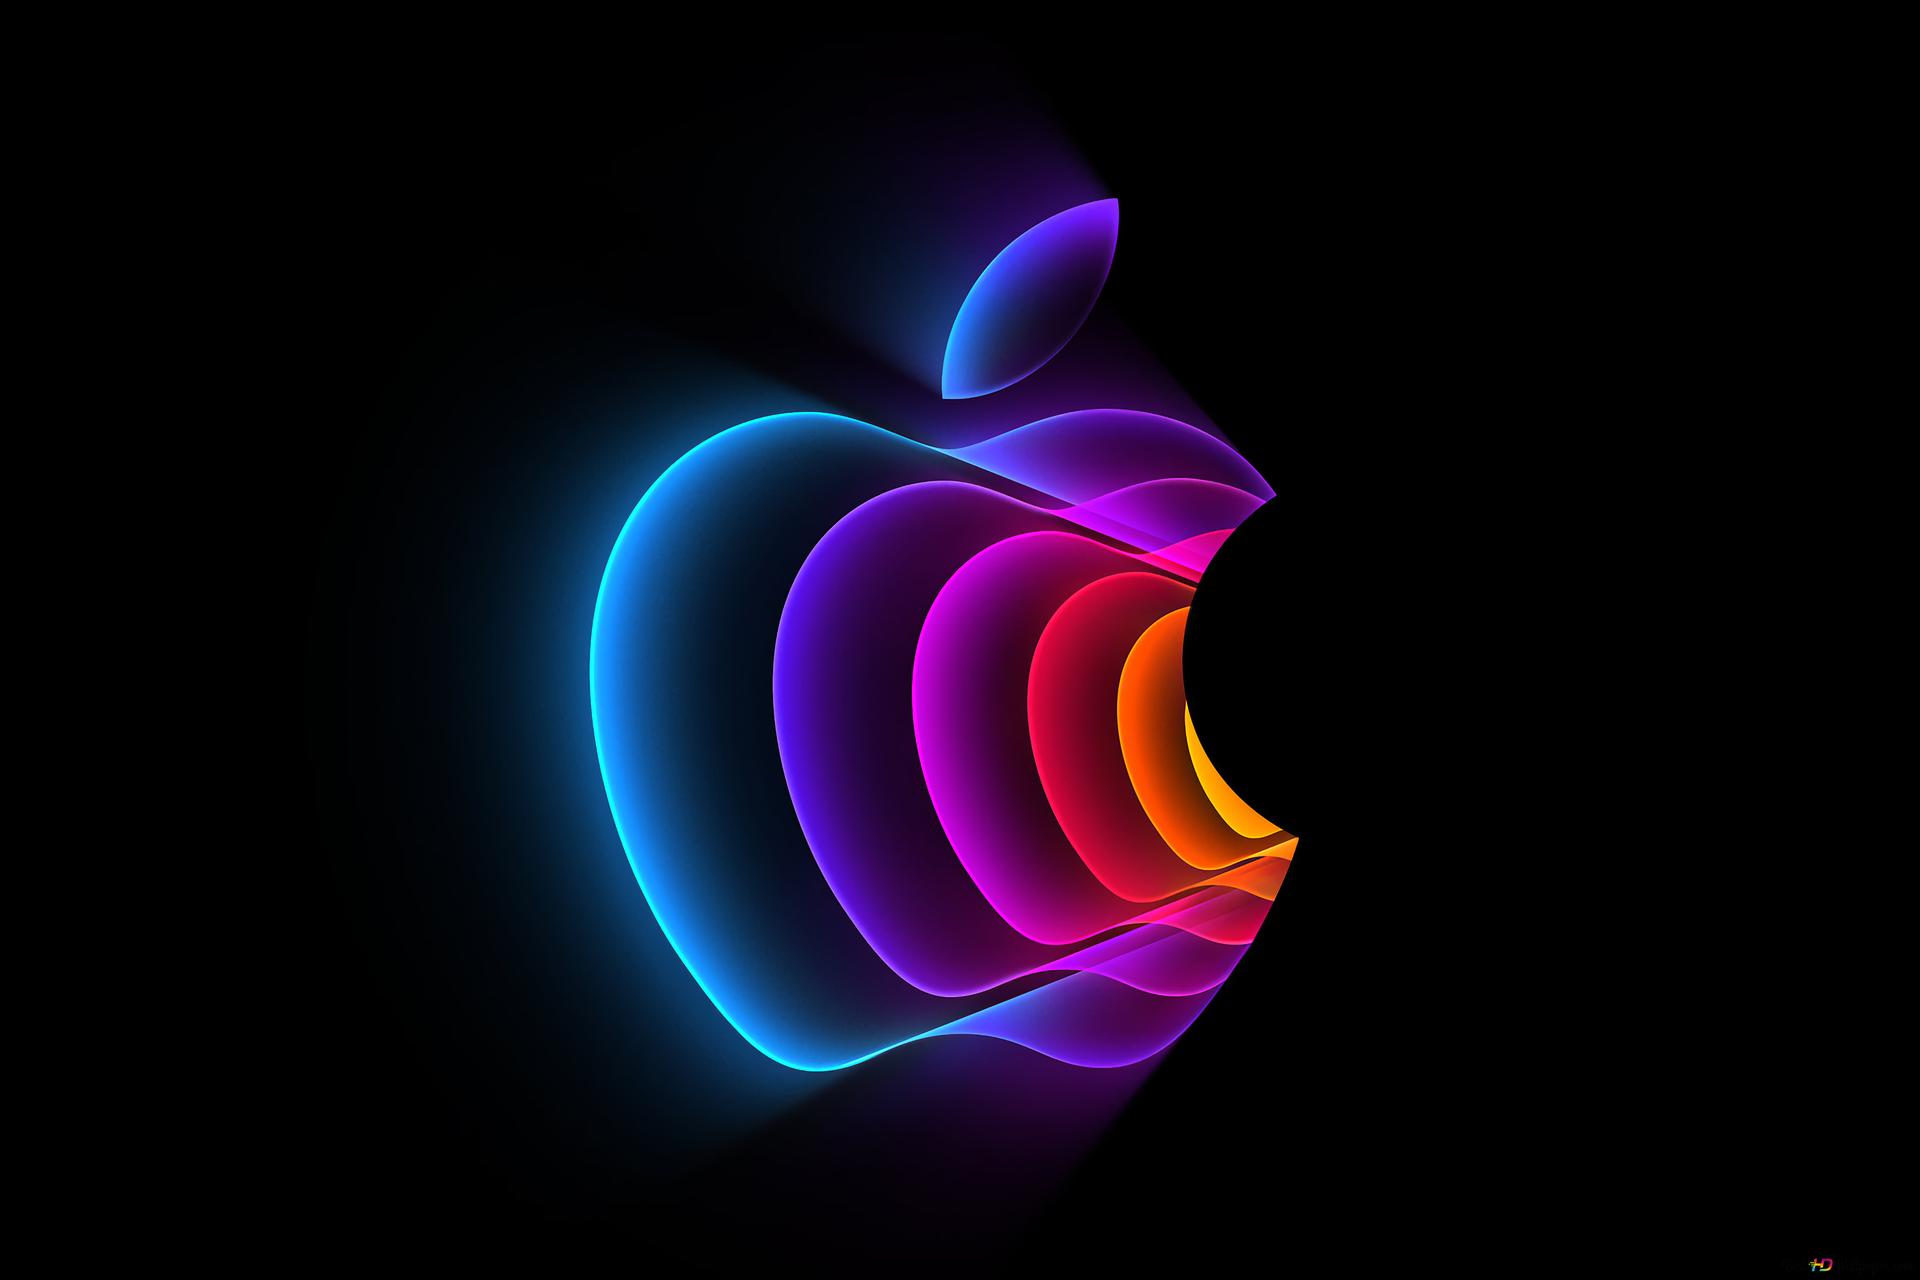 3D colorful Apple logo 4K wallpaper download